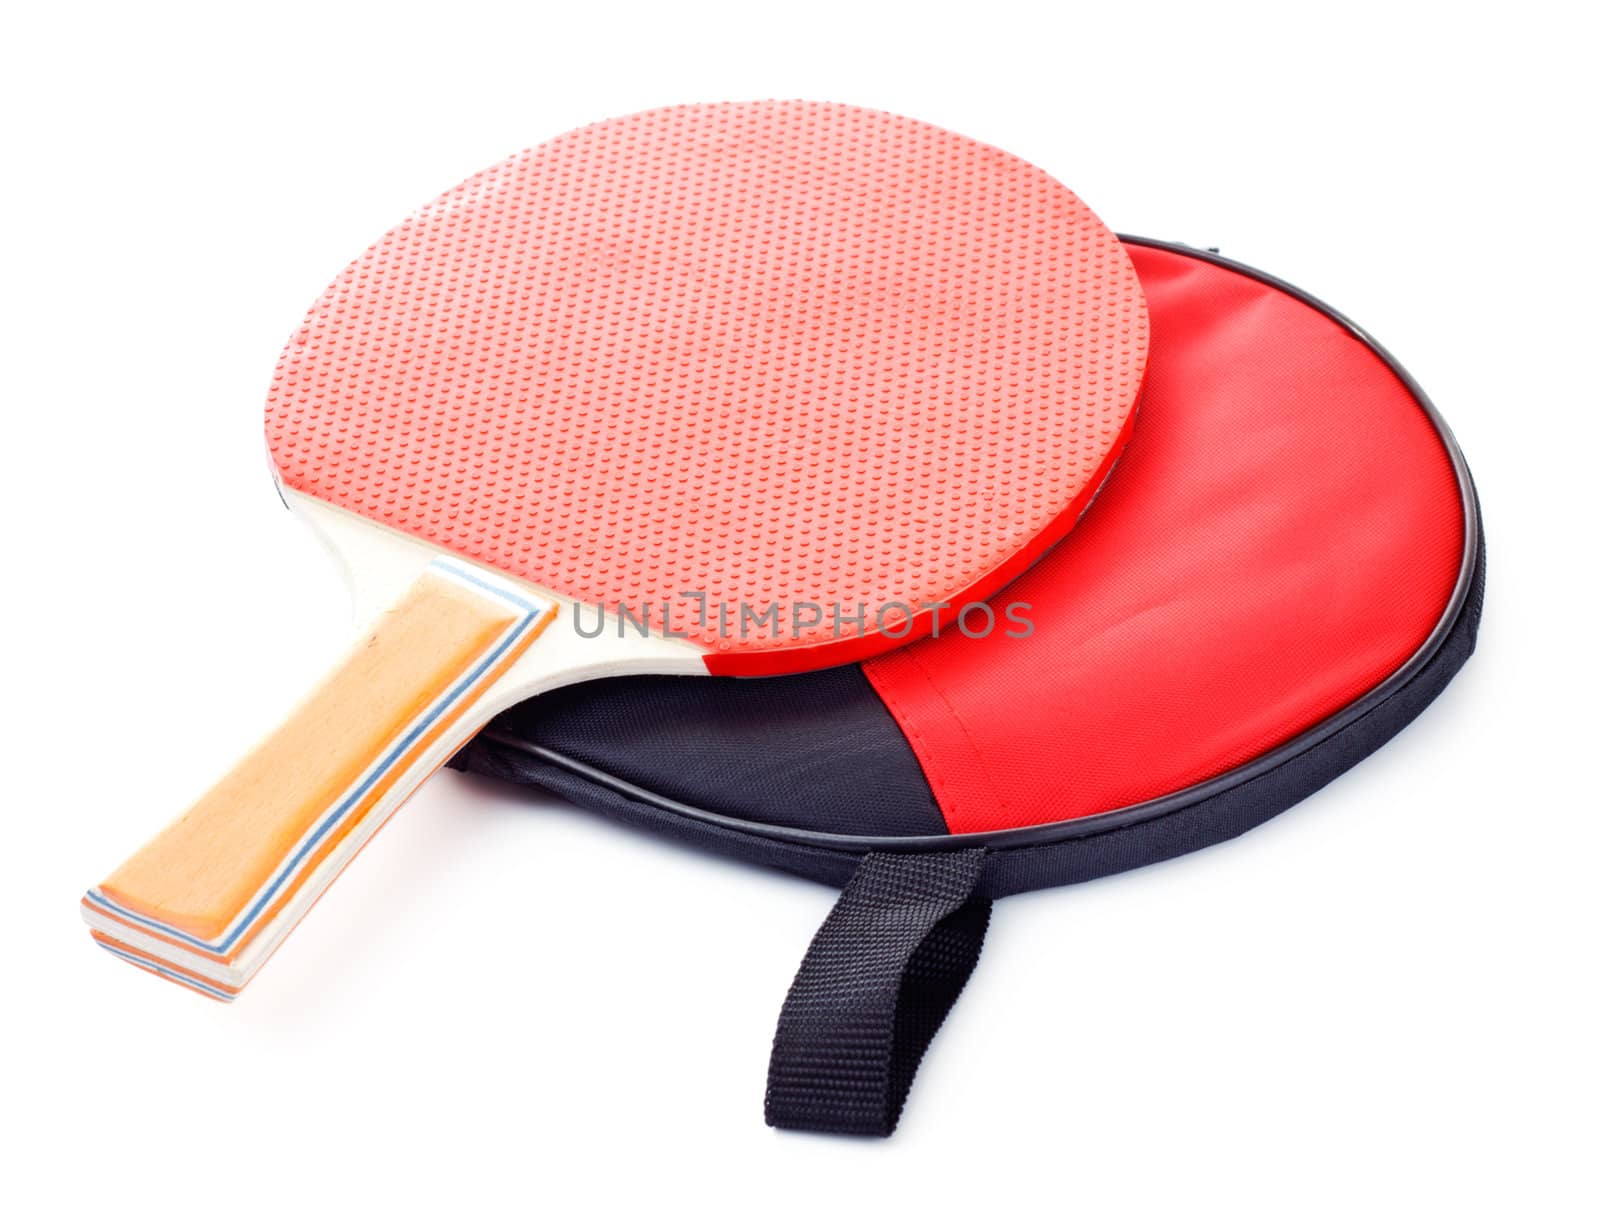 table tennis racket by petr_malyshev